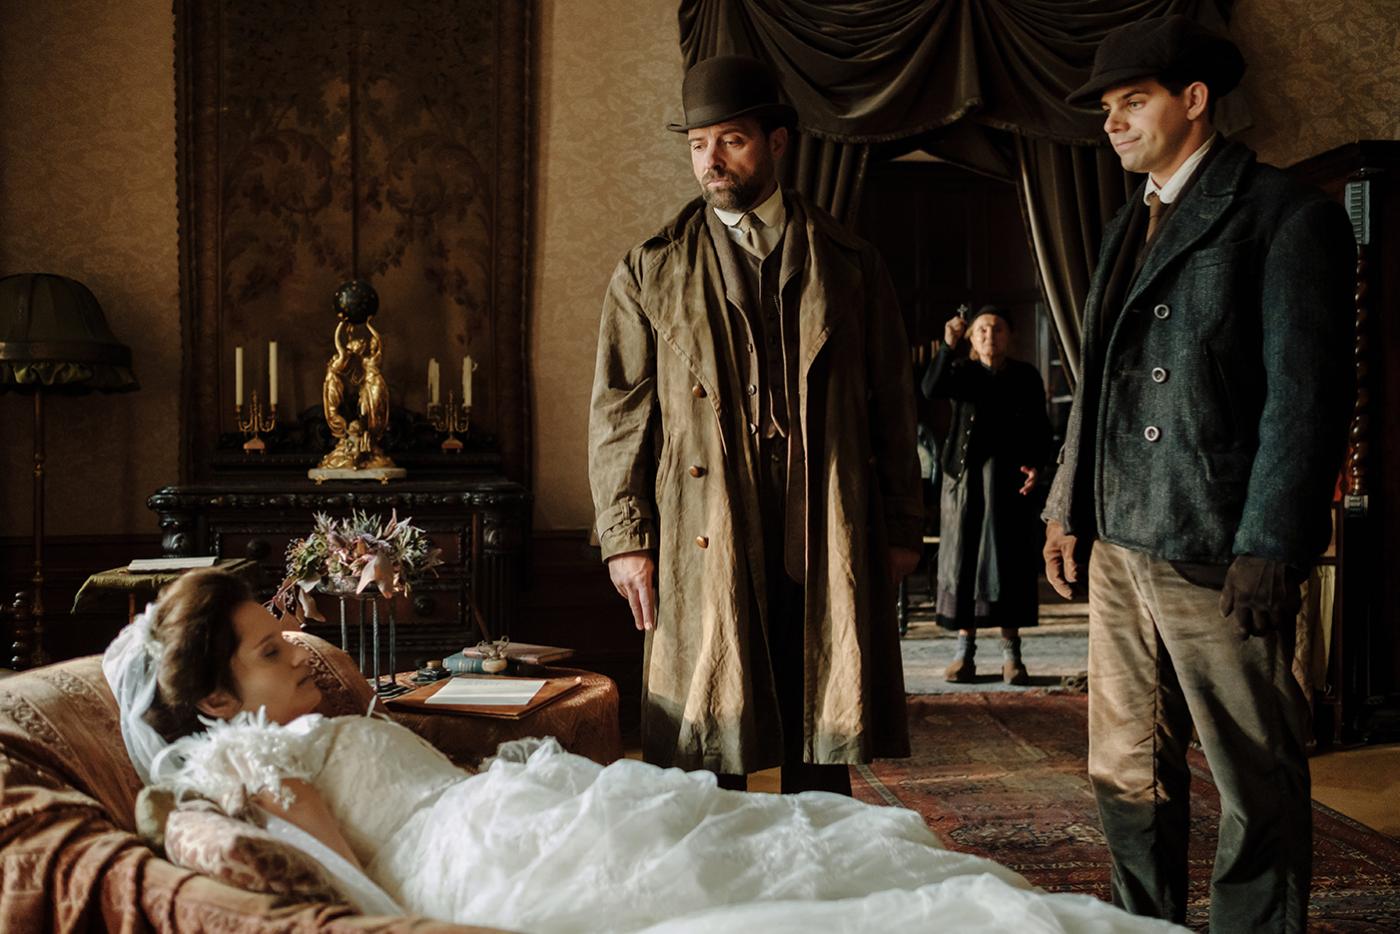 Oskar and Haussmann in Vienna Blood. Photo: Petro Domenigg/2019 Endor Productions/MR Film